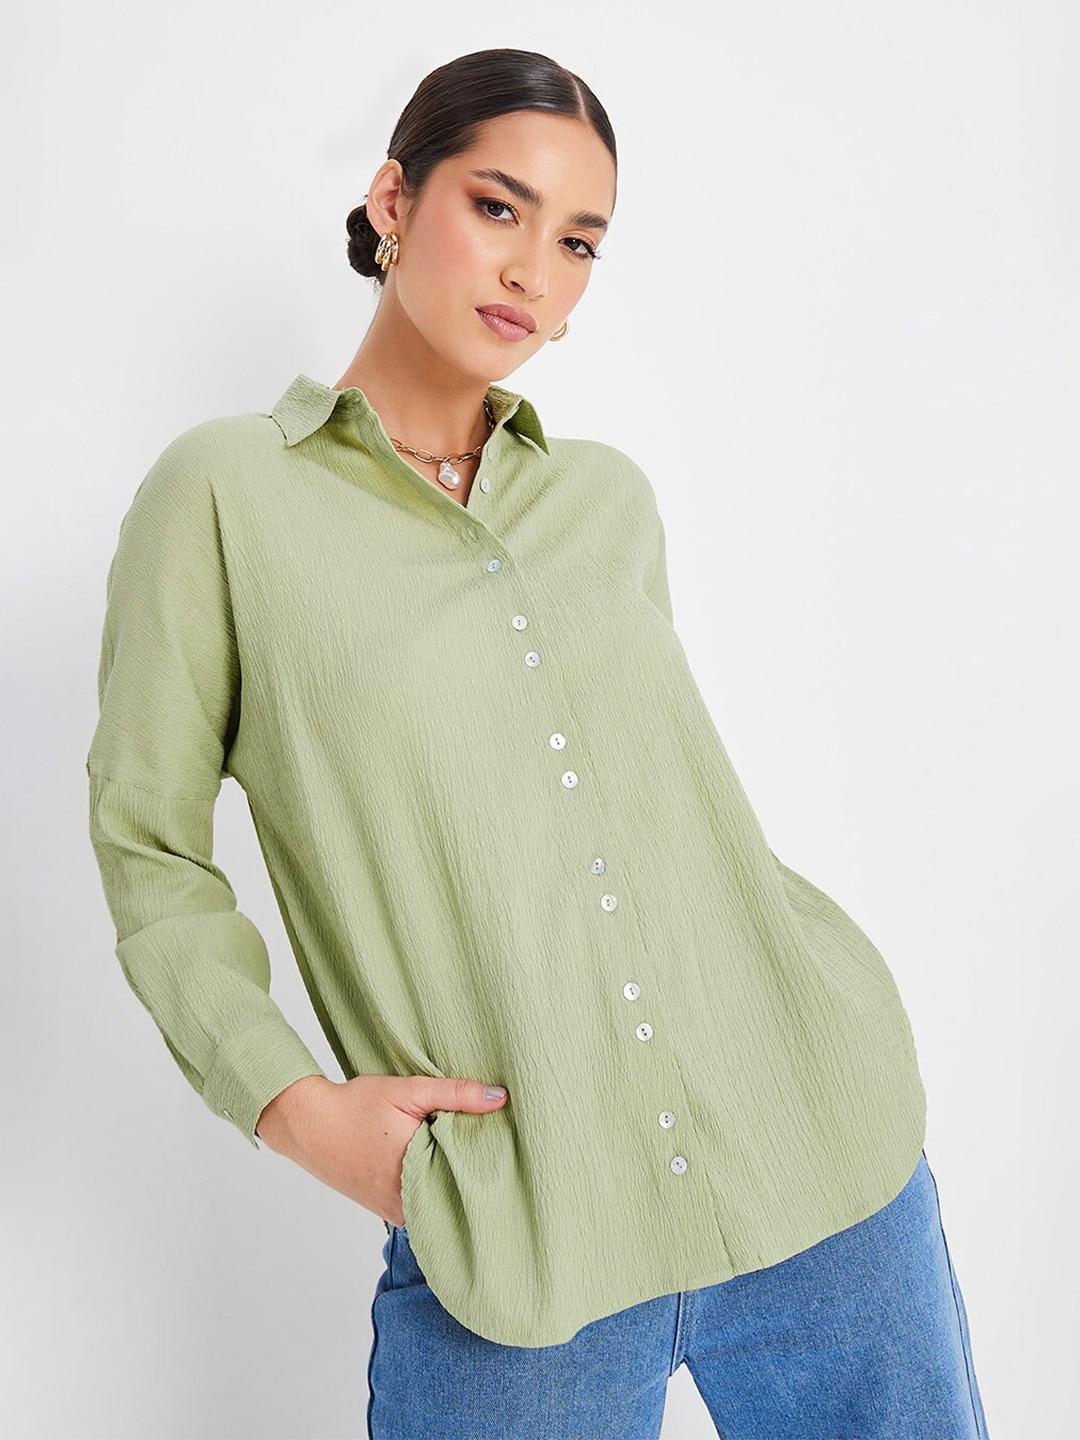 styli-green-spread-collar-regular-fit-casual-shirt